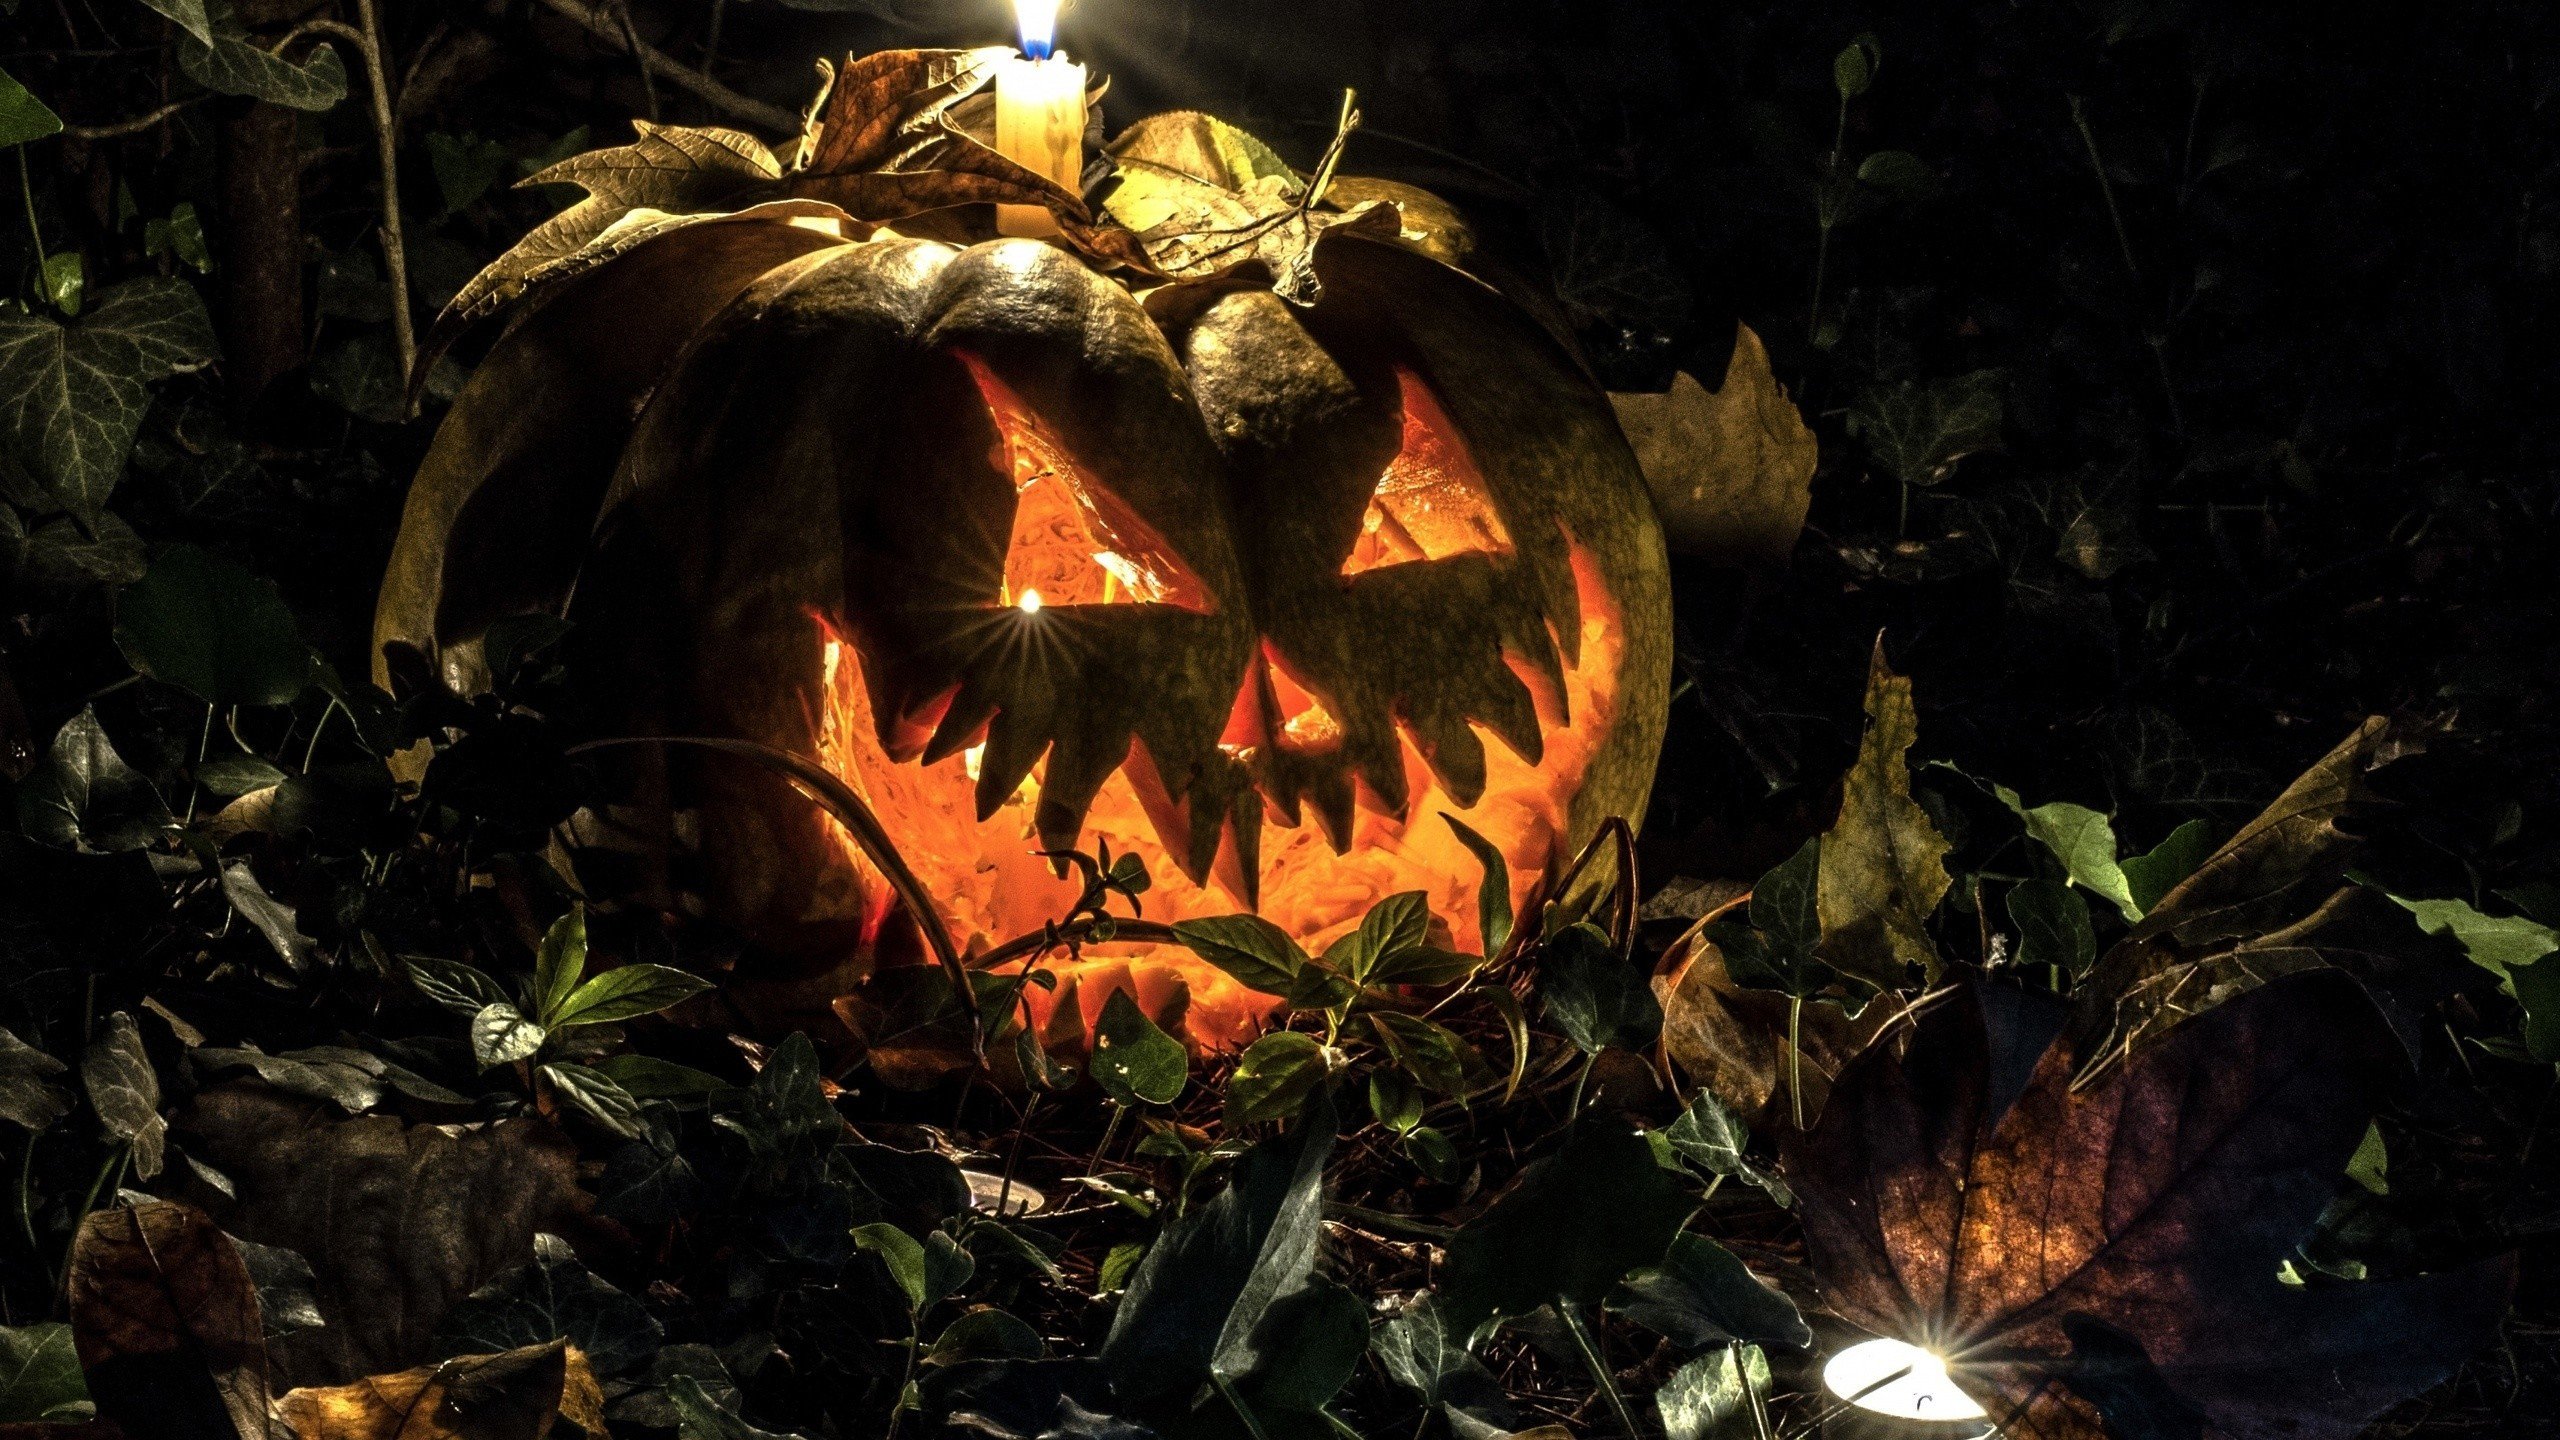 Download 2560x1440 Halloween, Pumpkin, Autumn, Night, Creepy Wallpaper for iMac 27 inch